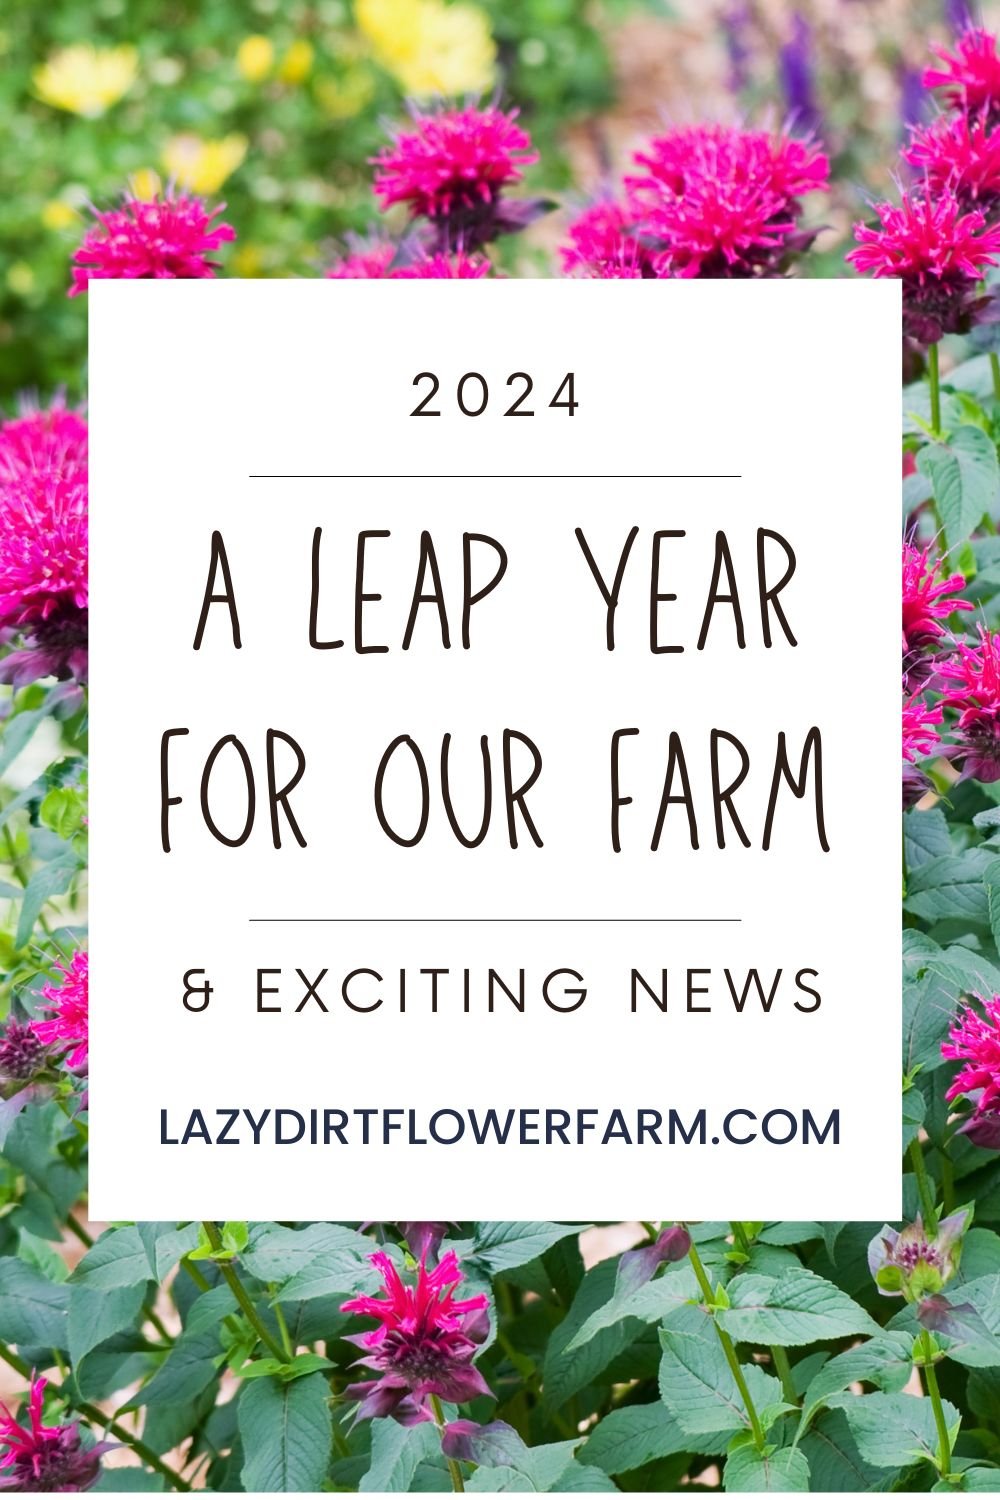 a leap year for our farm 2024 lazy dirt flower farm .jpg